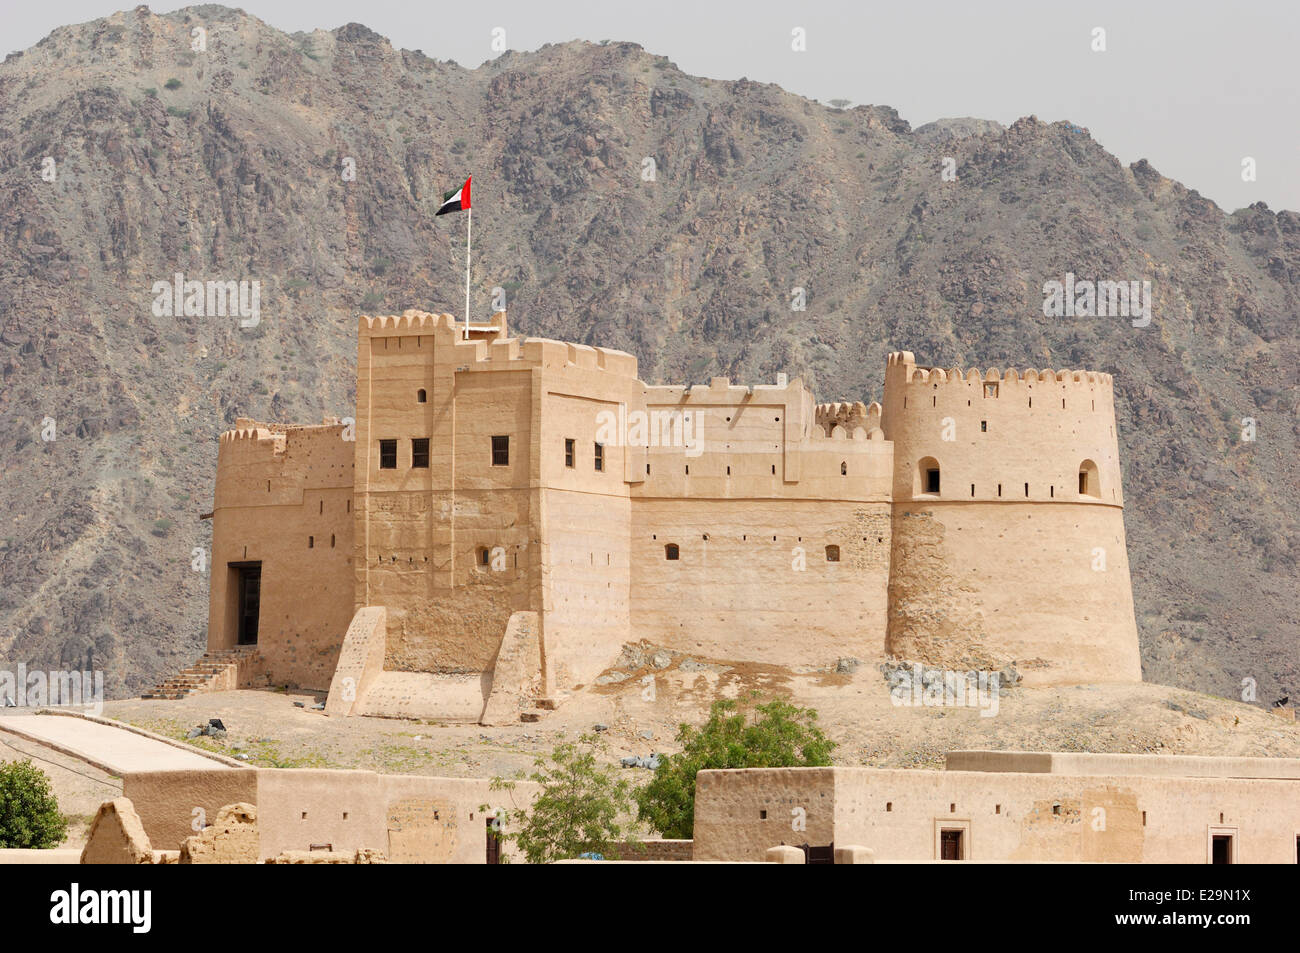 United Arab Emirates, Fujairah emirate, Fujairah, old fort of the city of Fujairah Stock Photo